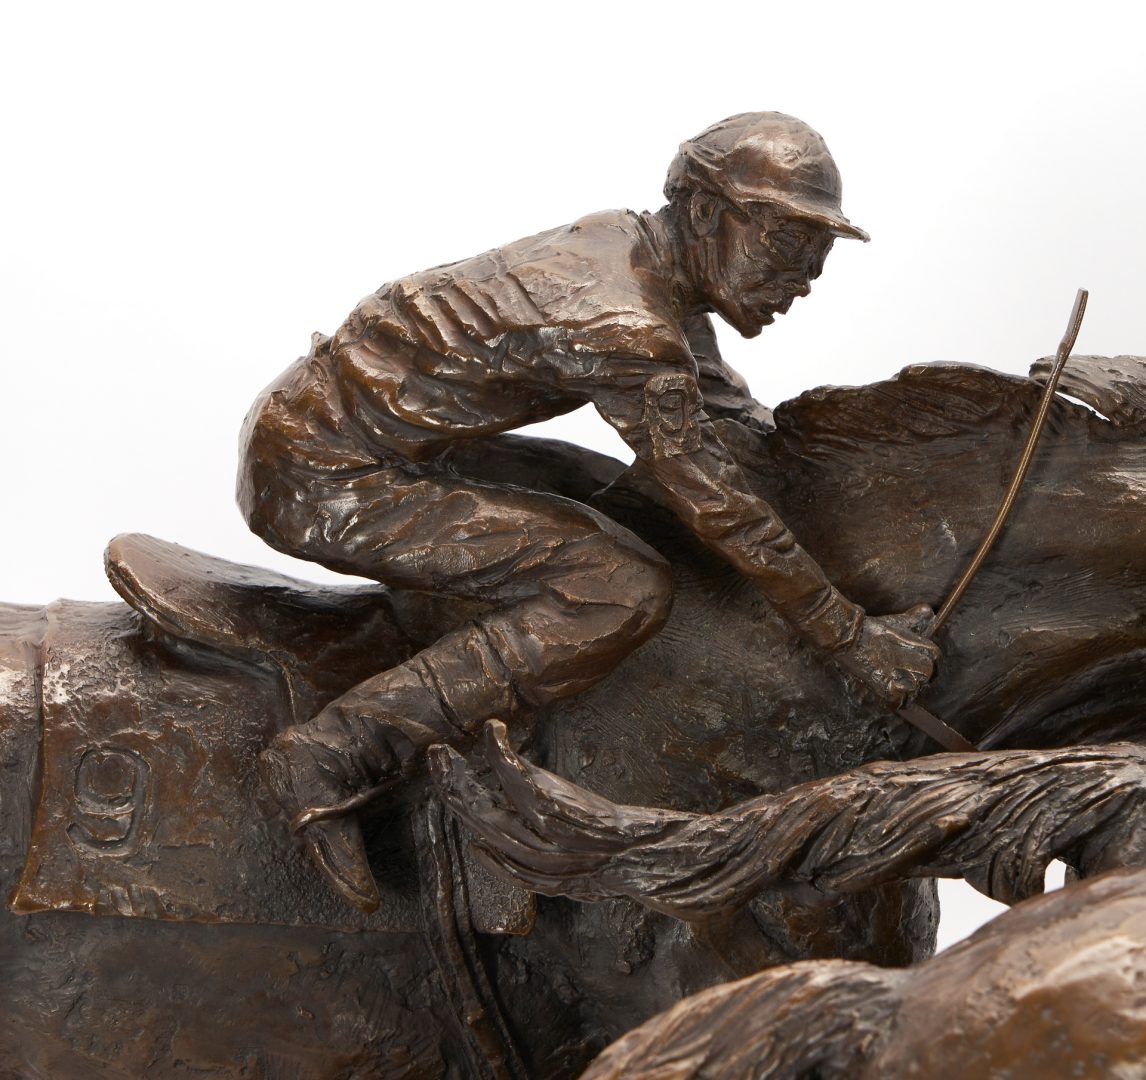 Lot 176: Lorenzo Ghiglieri Bronze Horse Racing Sculpture, Photo Finish